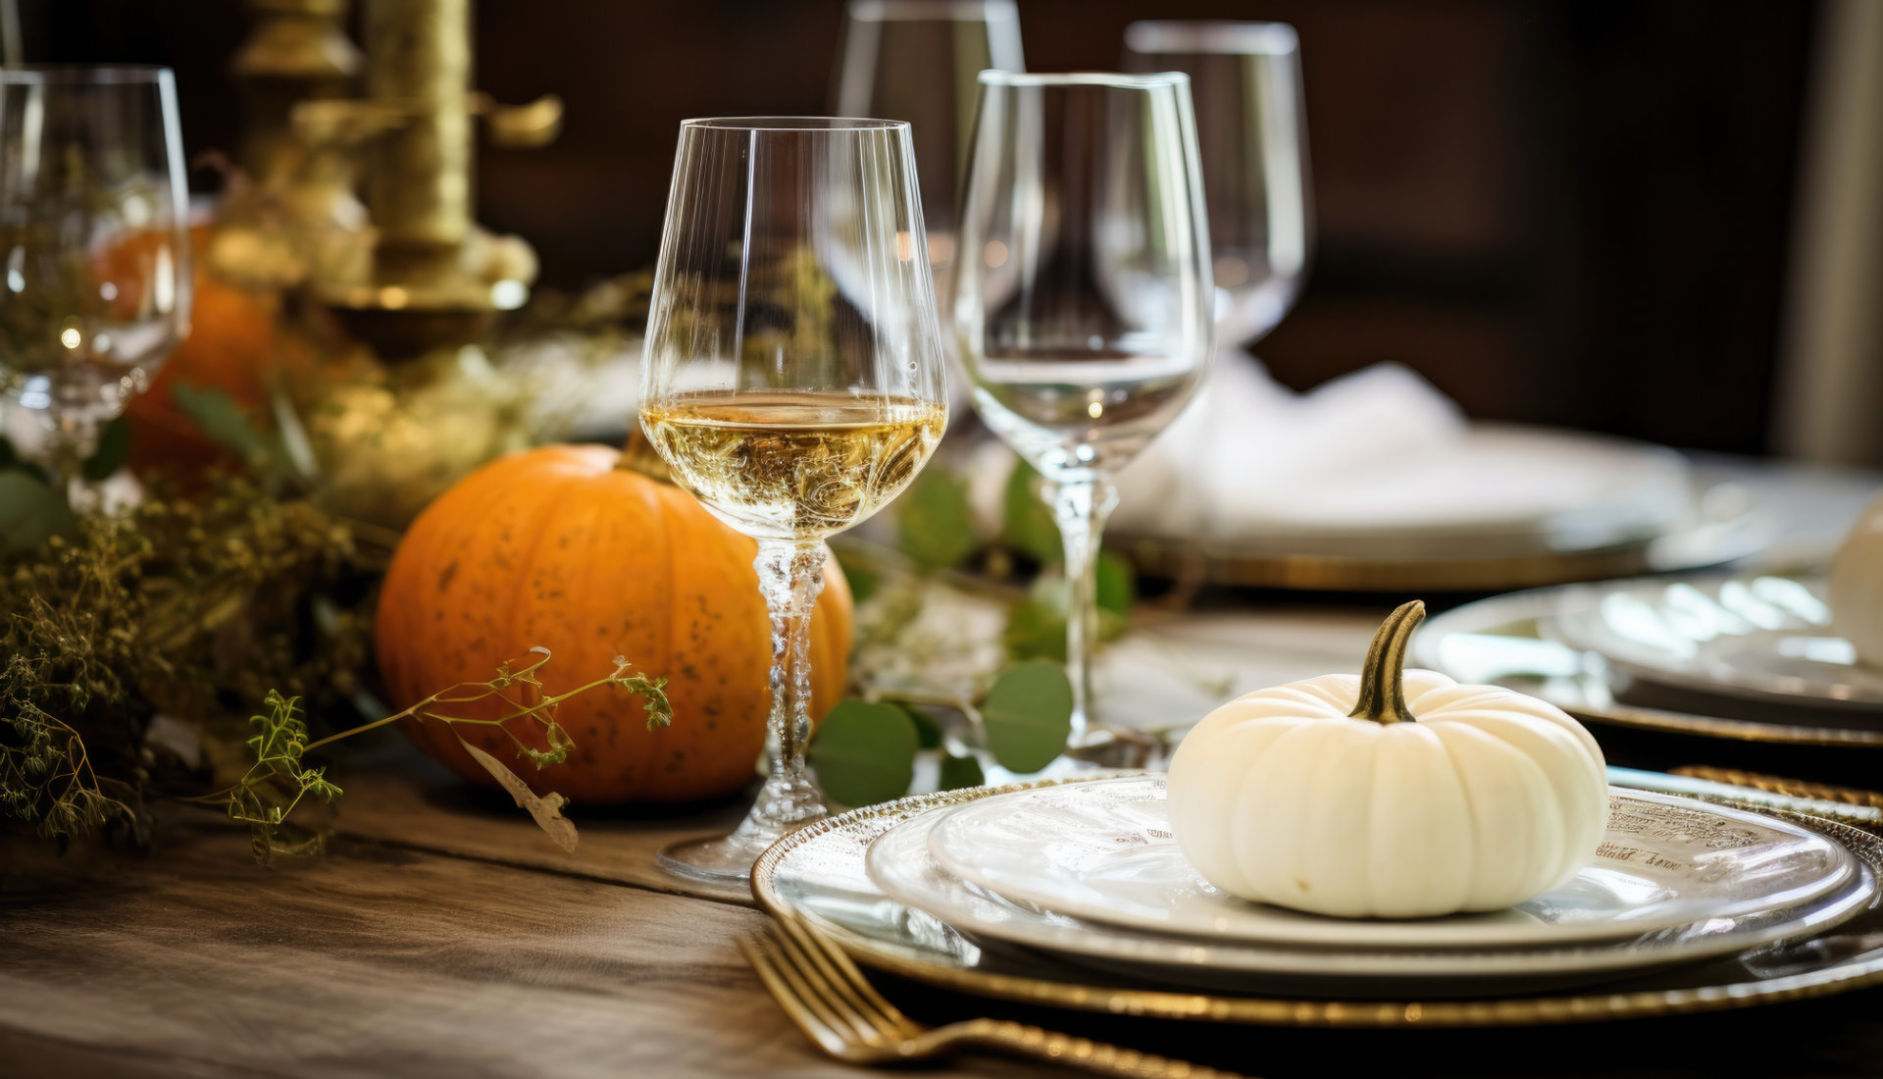 white wine serving temperature - glasses of white wine during autumn